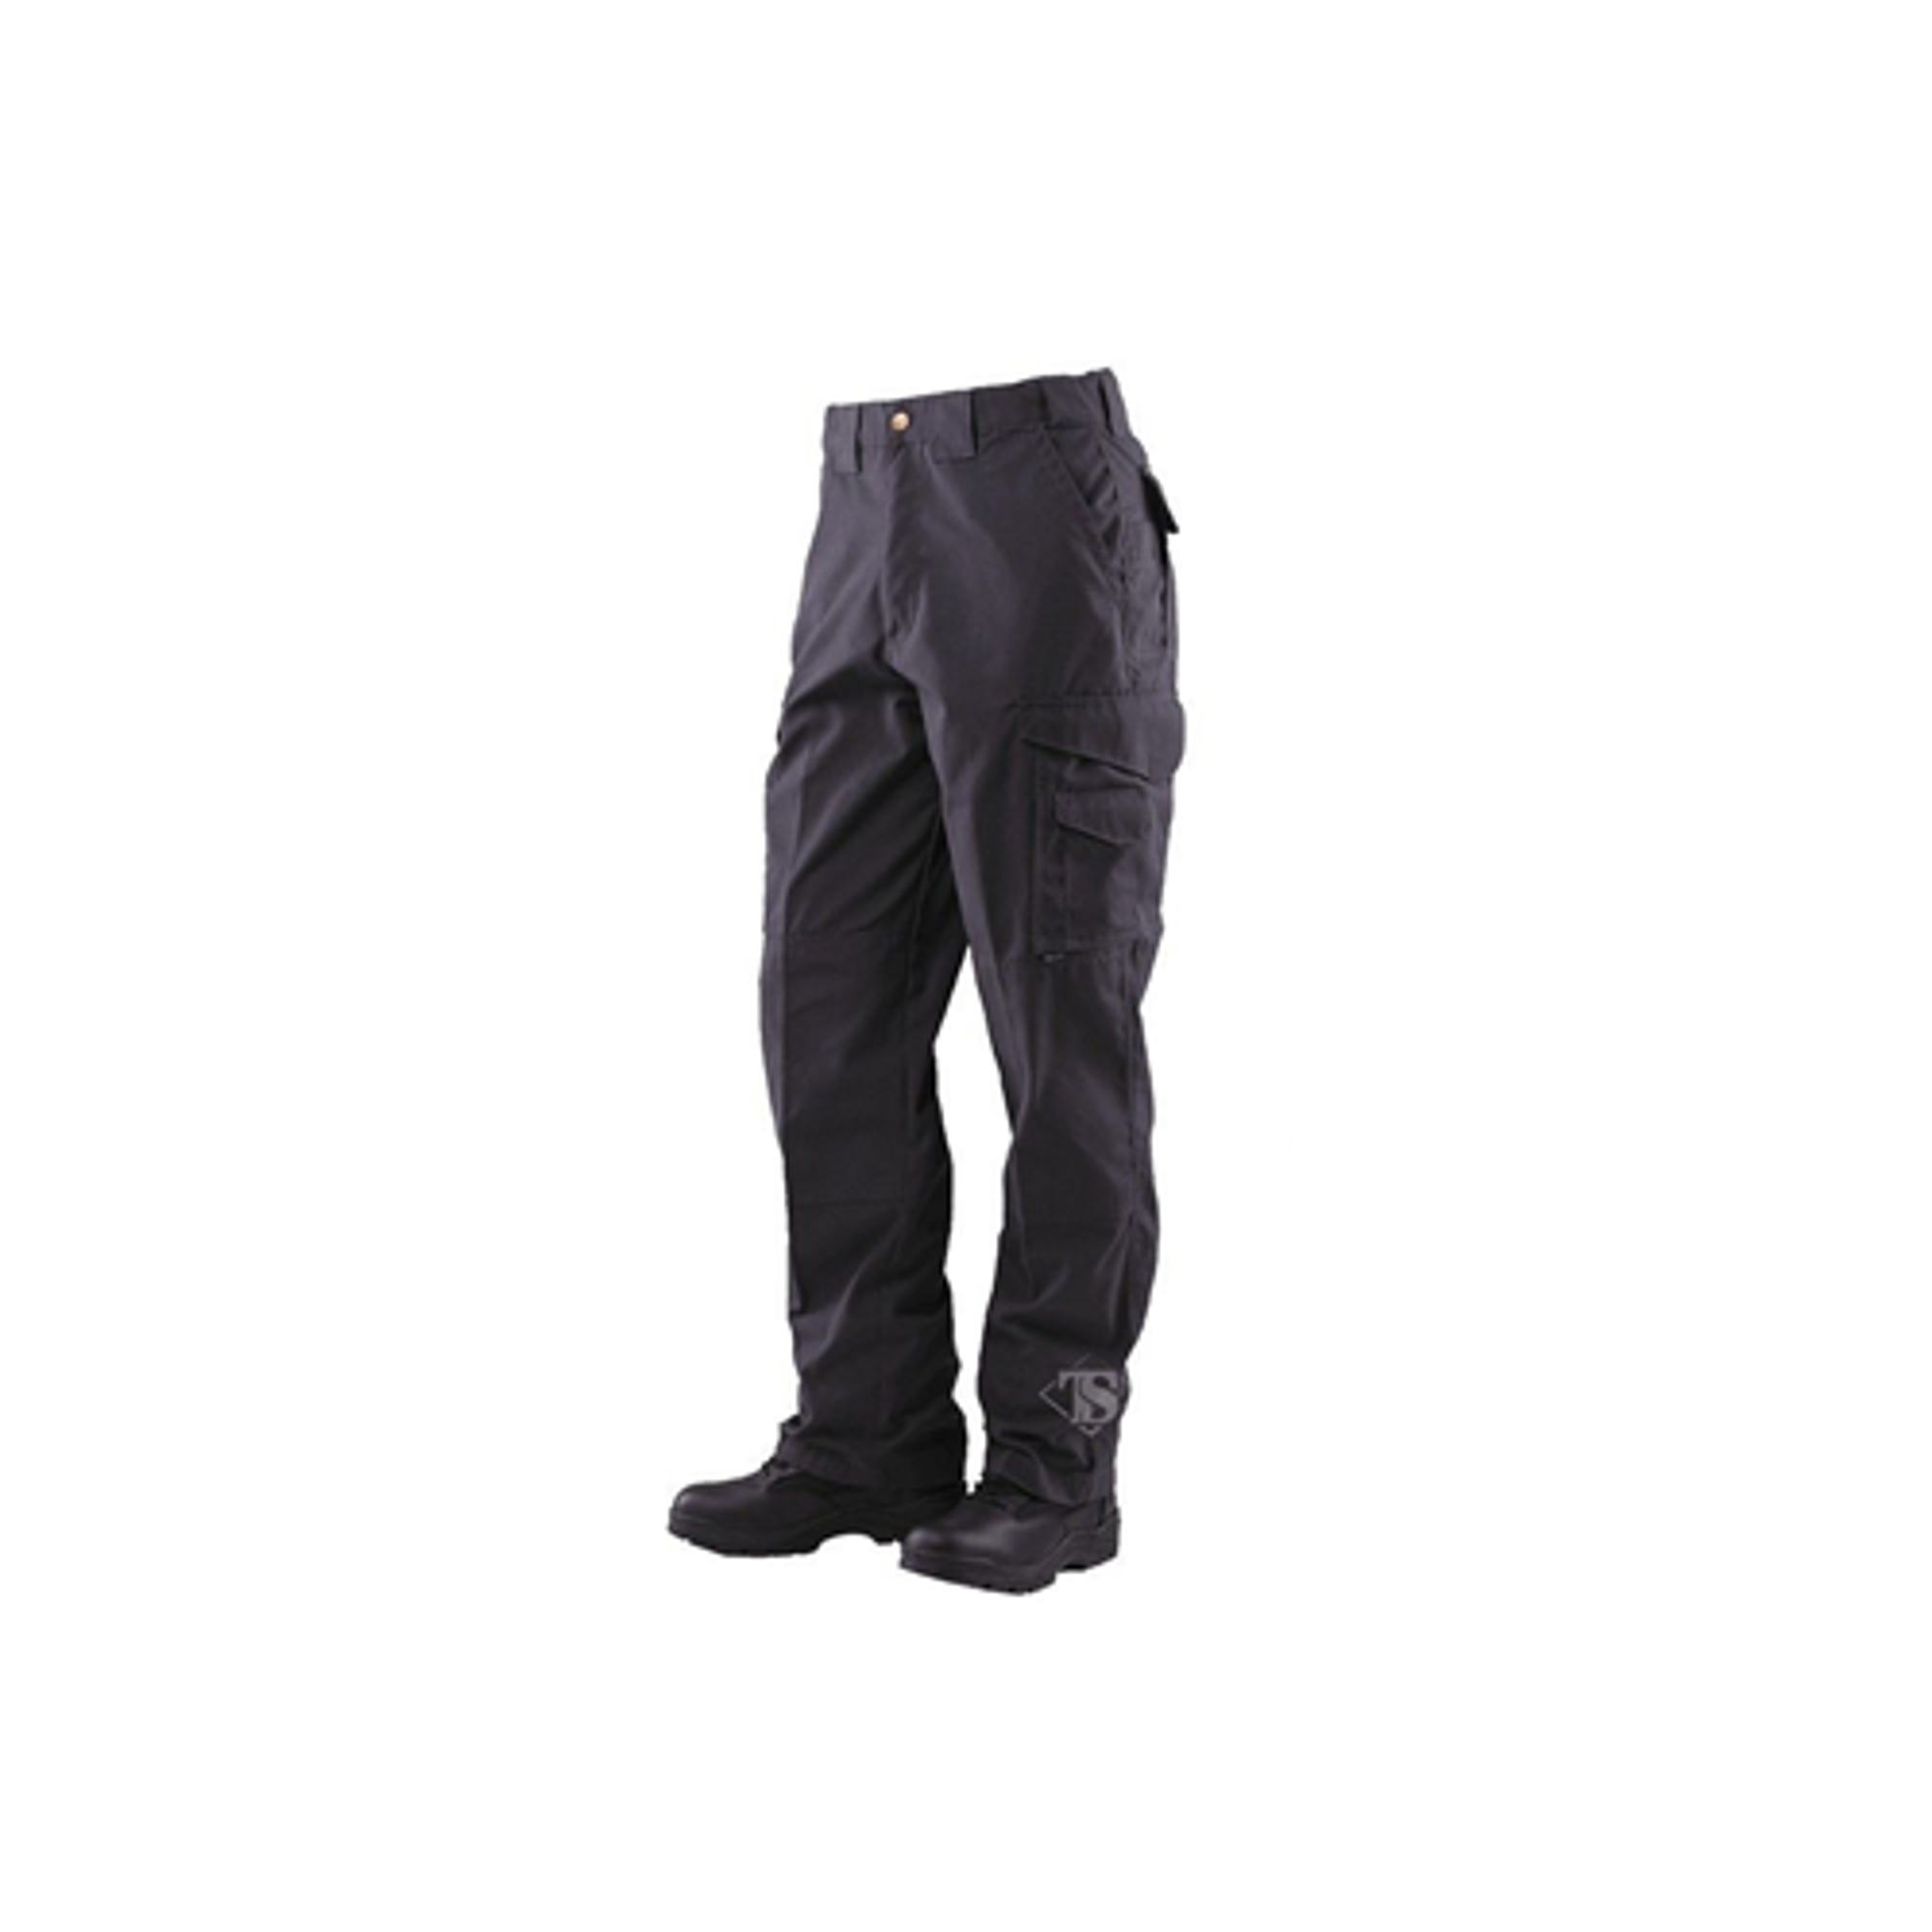 24-7 Original Tactical Pants - 6.5oz - Black - KRTSP-1062026